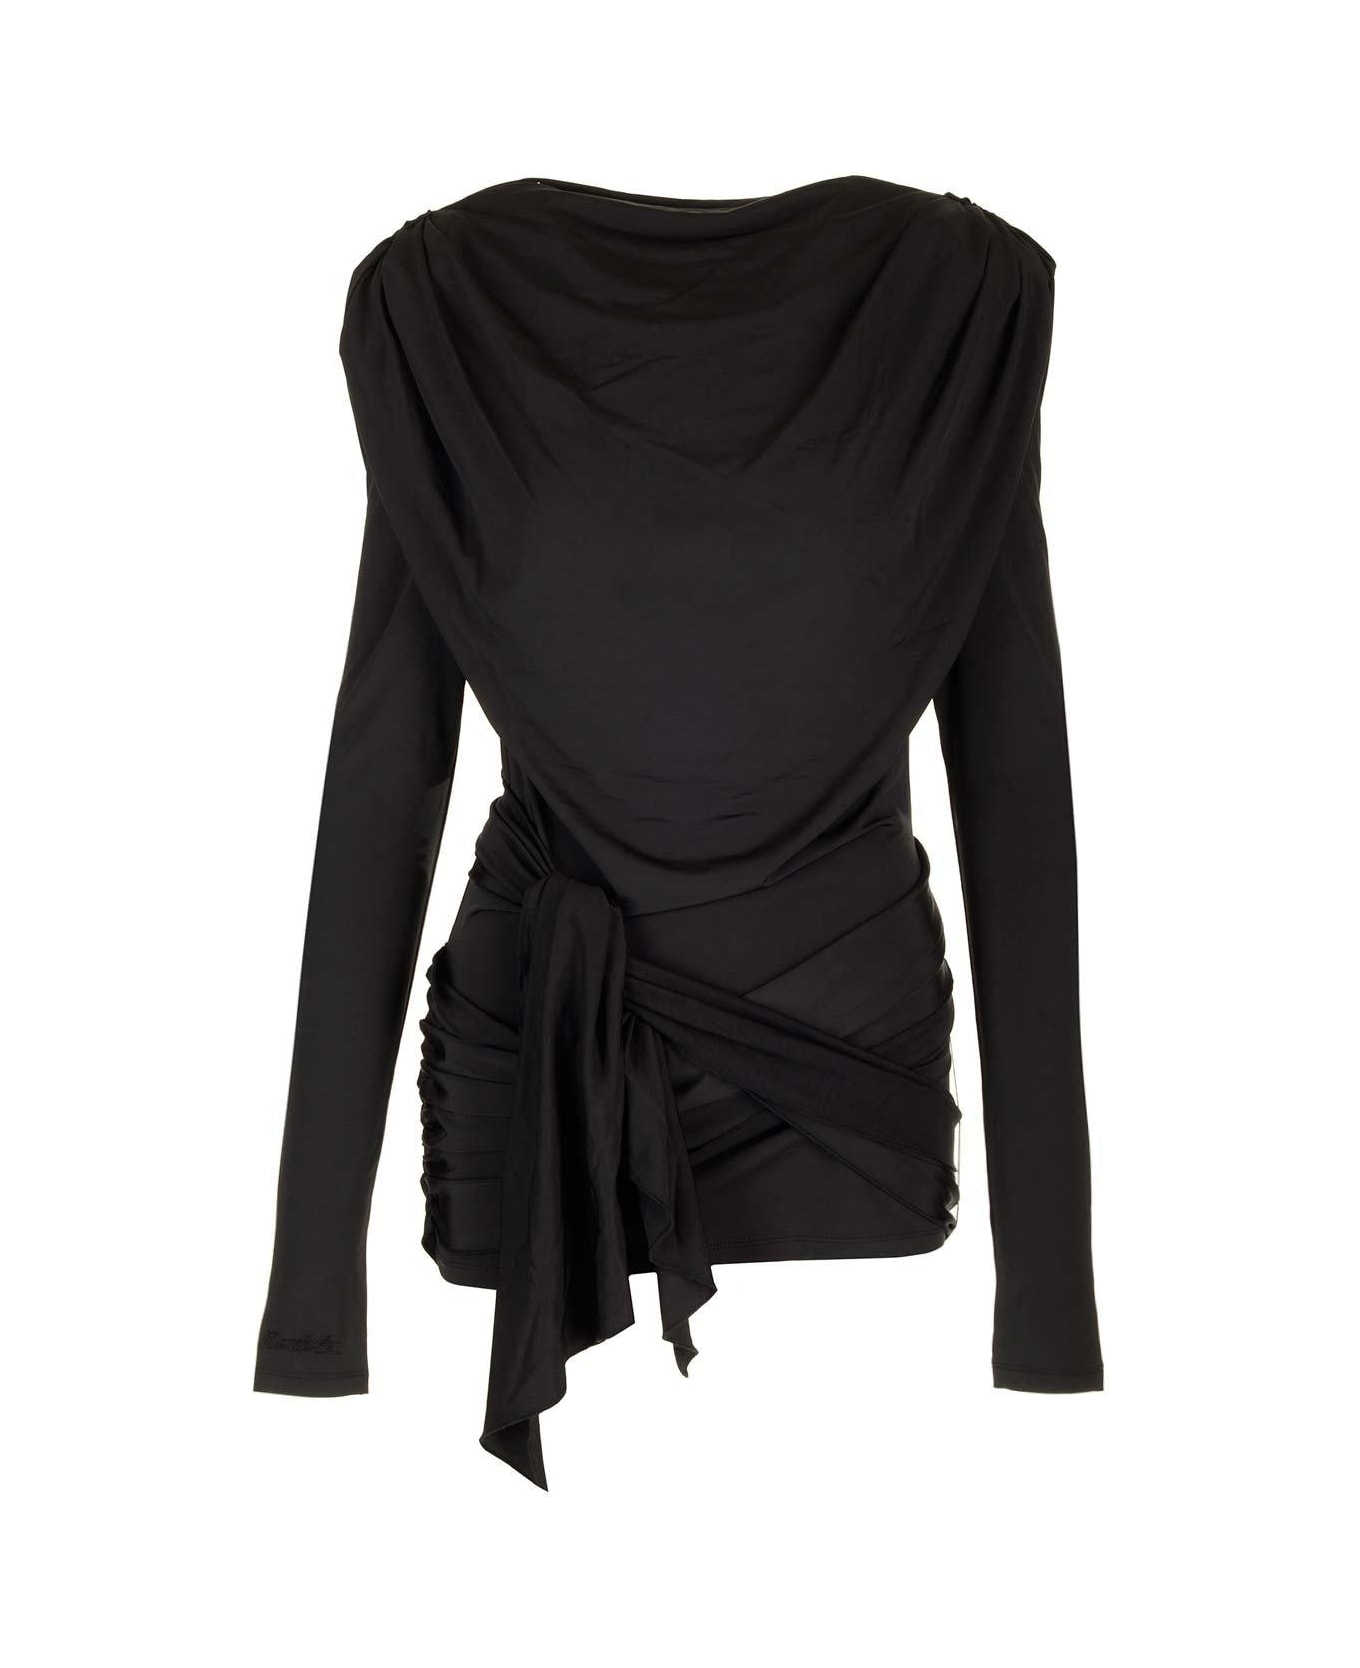 Rotate by Birger Christensen Bow-tie Mini Dress - Black